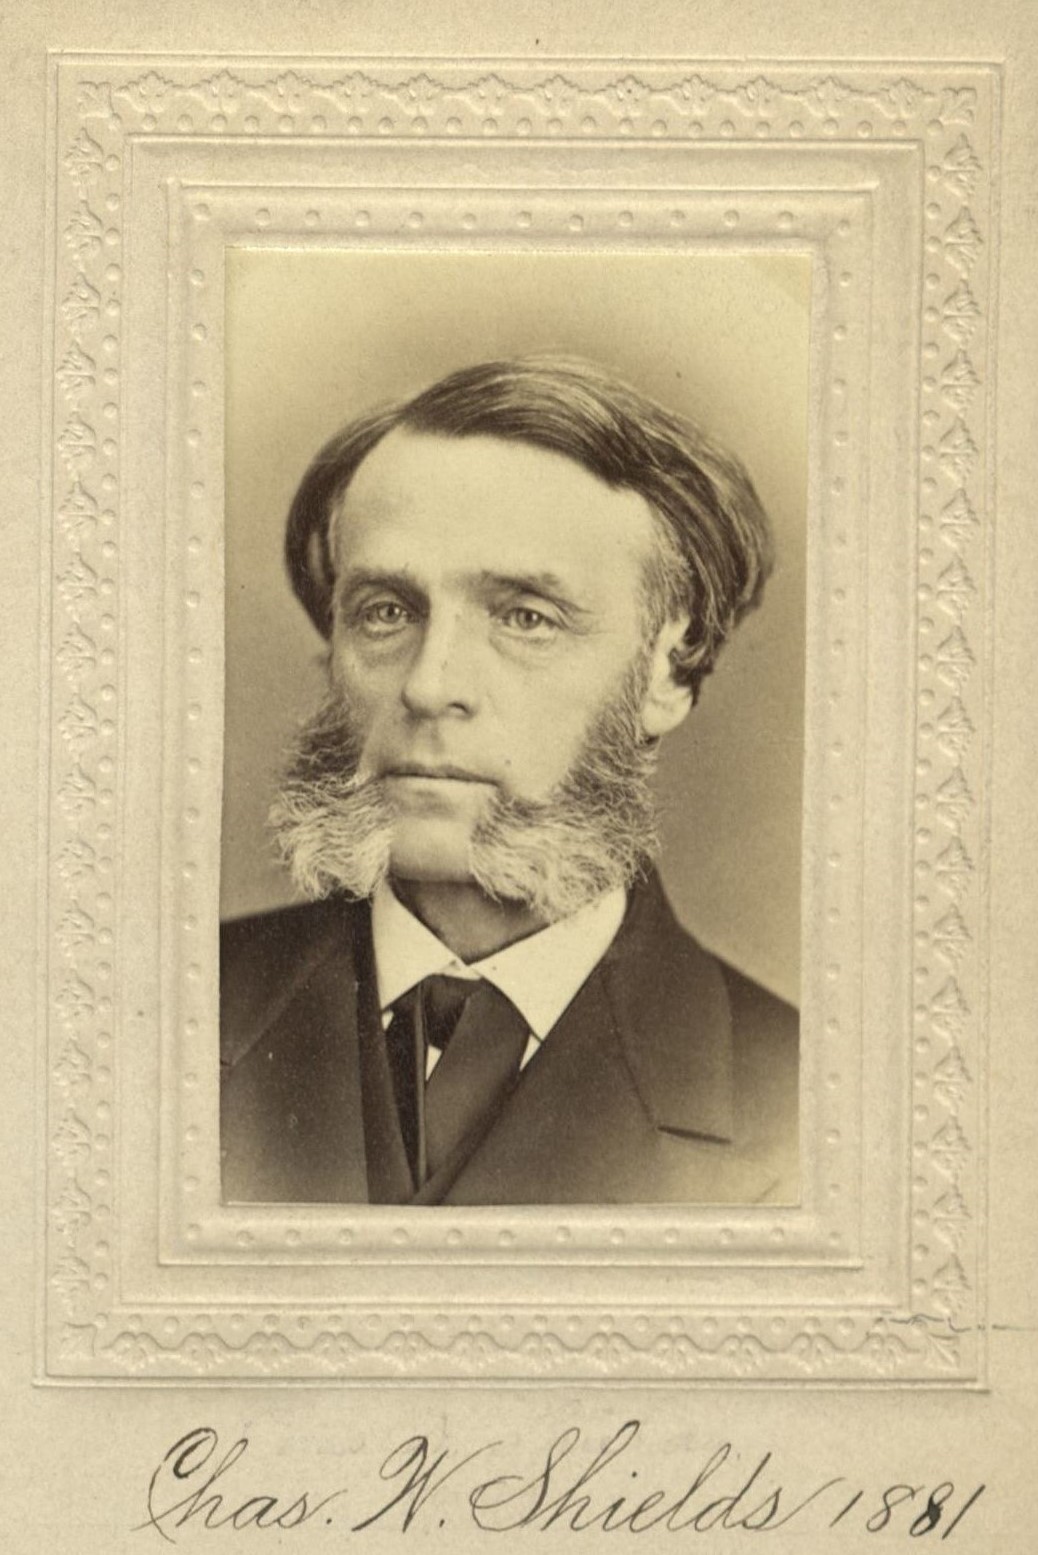 Member portrait of Charles W. Shields